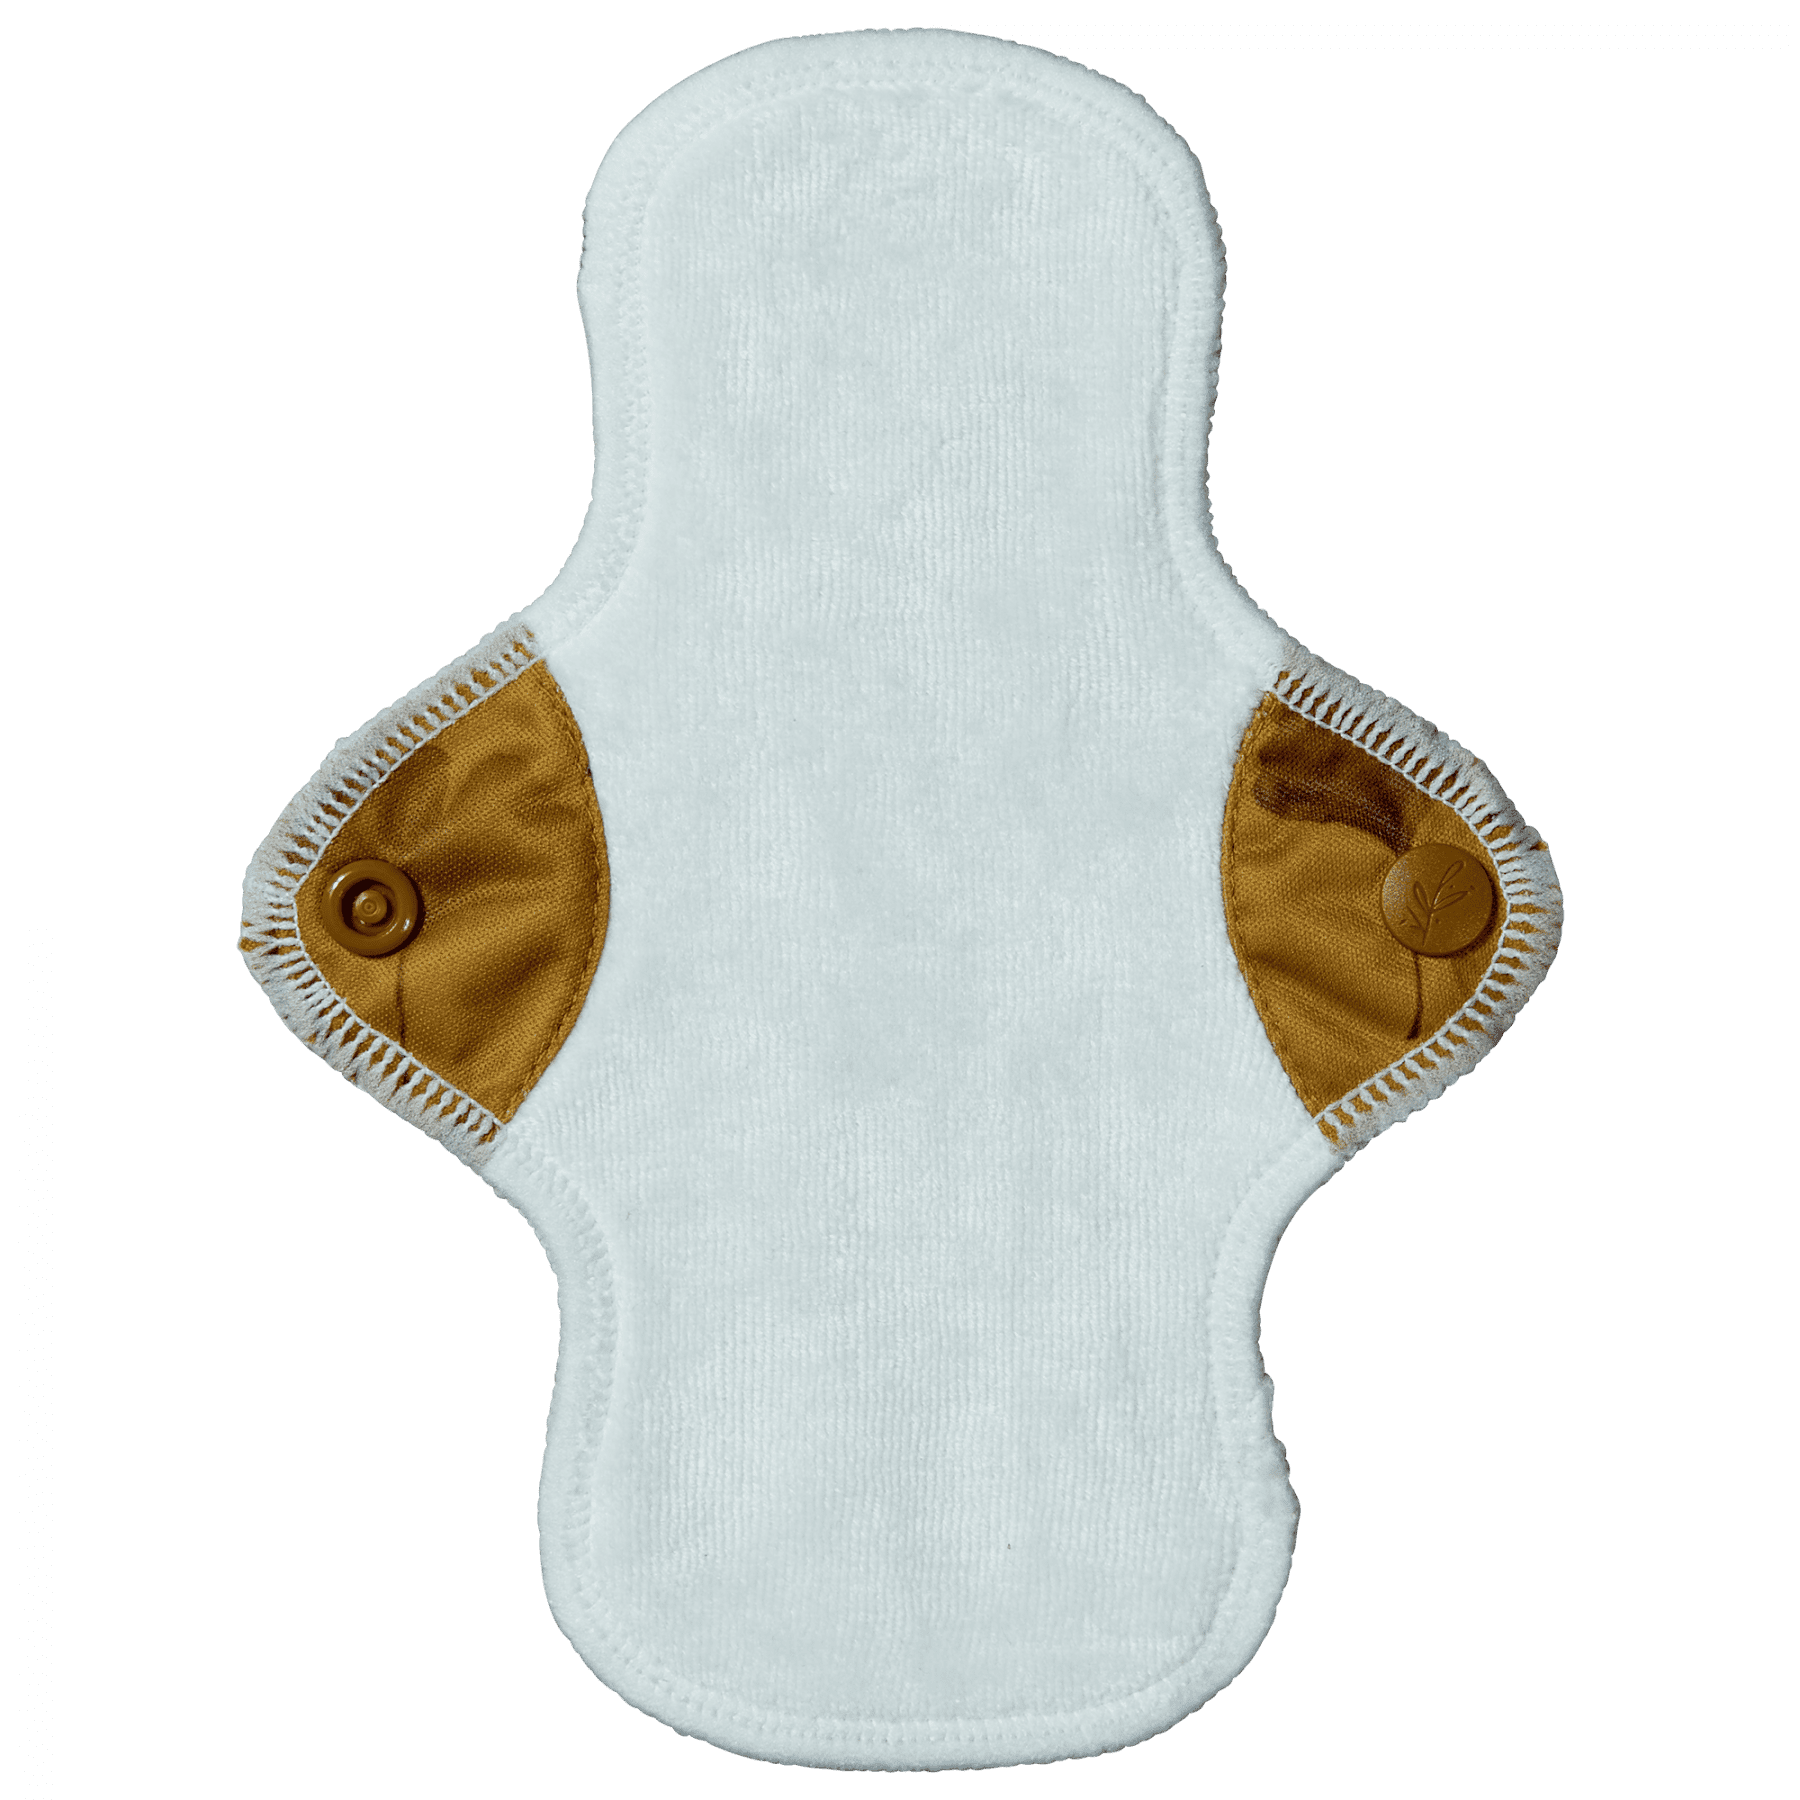 Light Flow - Ginkgo - small sanitary pad inside